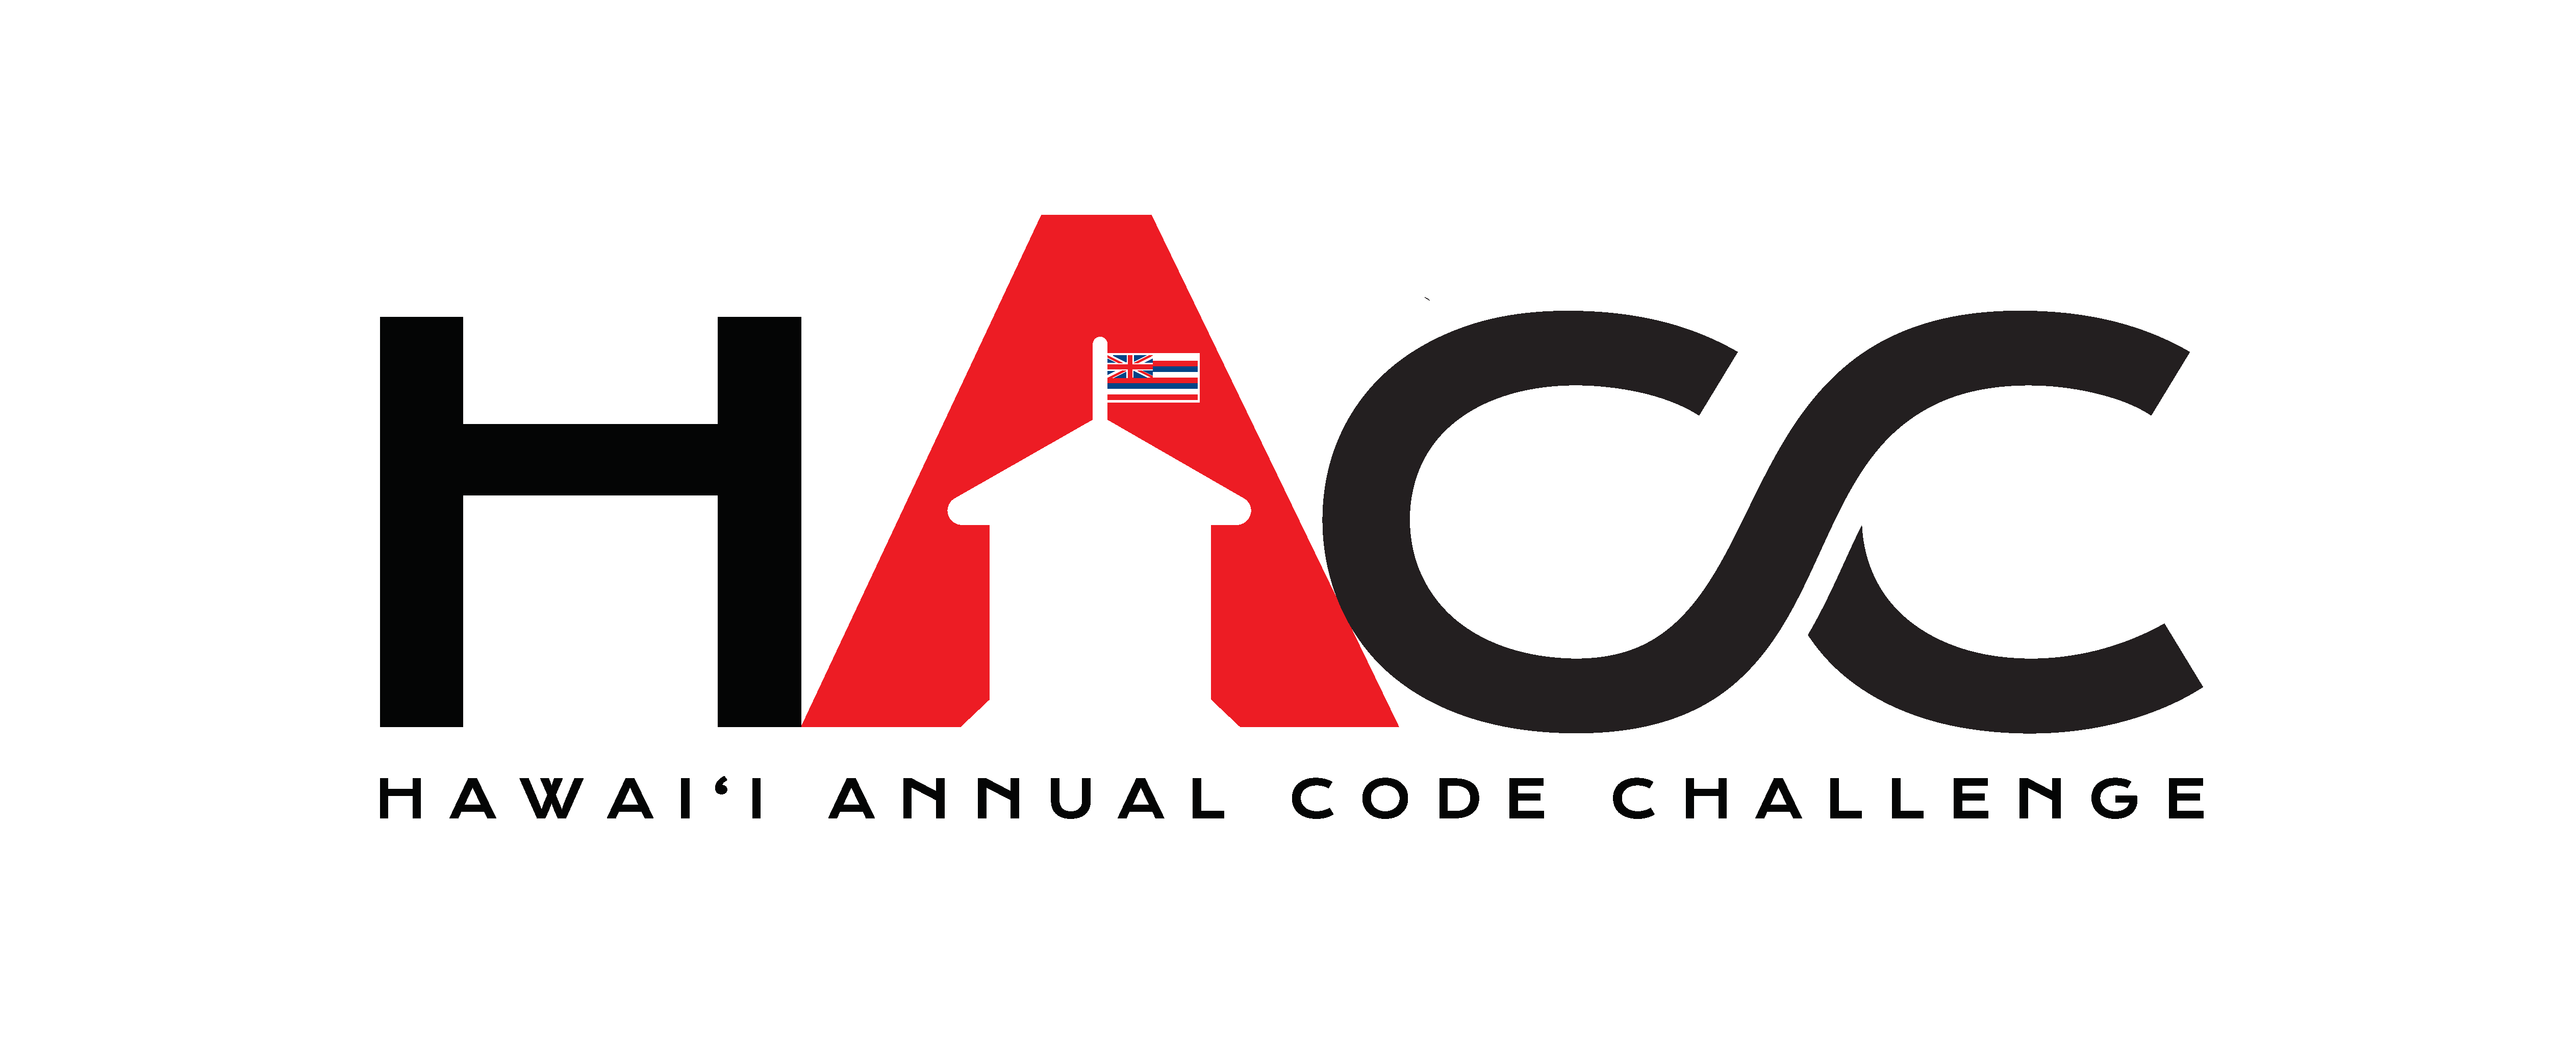 Hawaii Annual Code Challenge logo